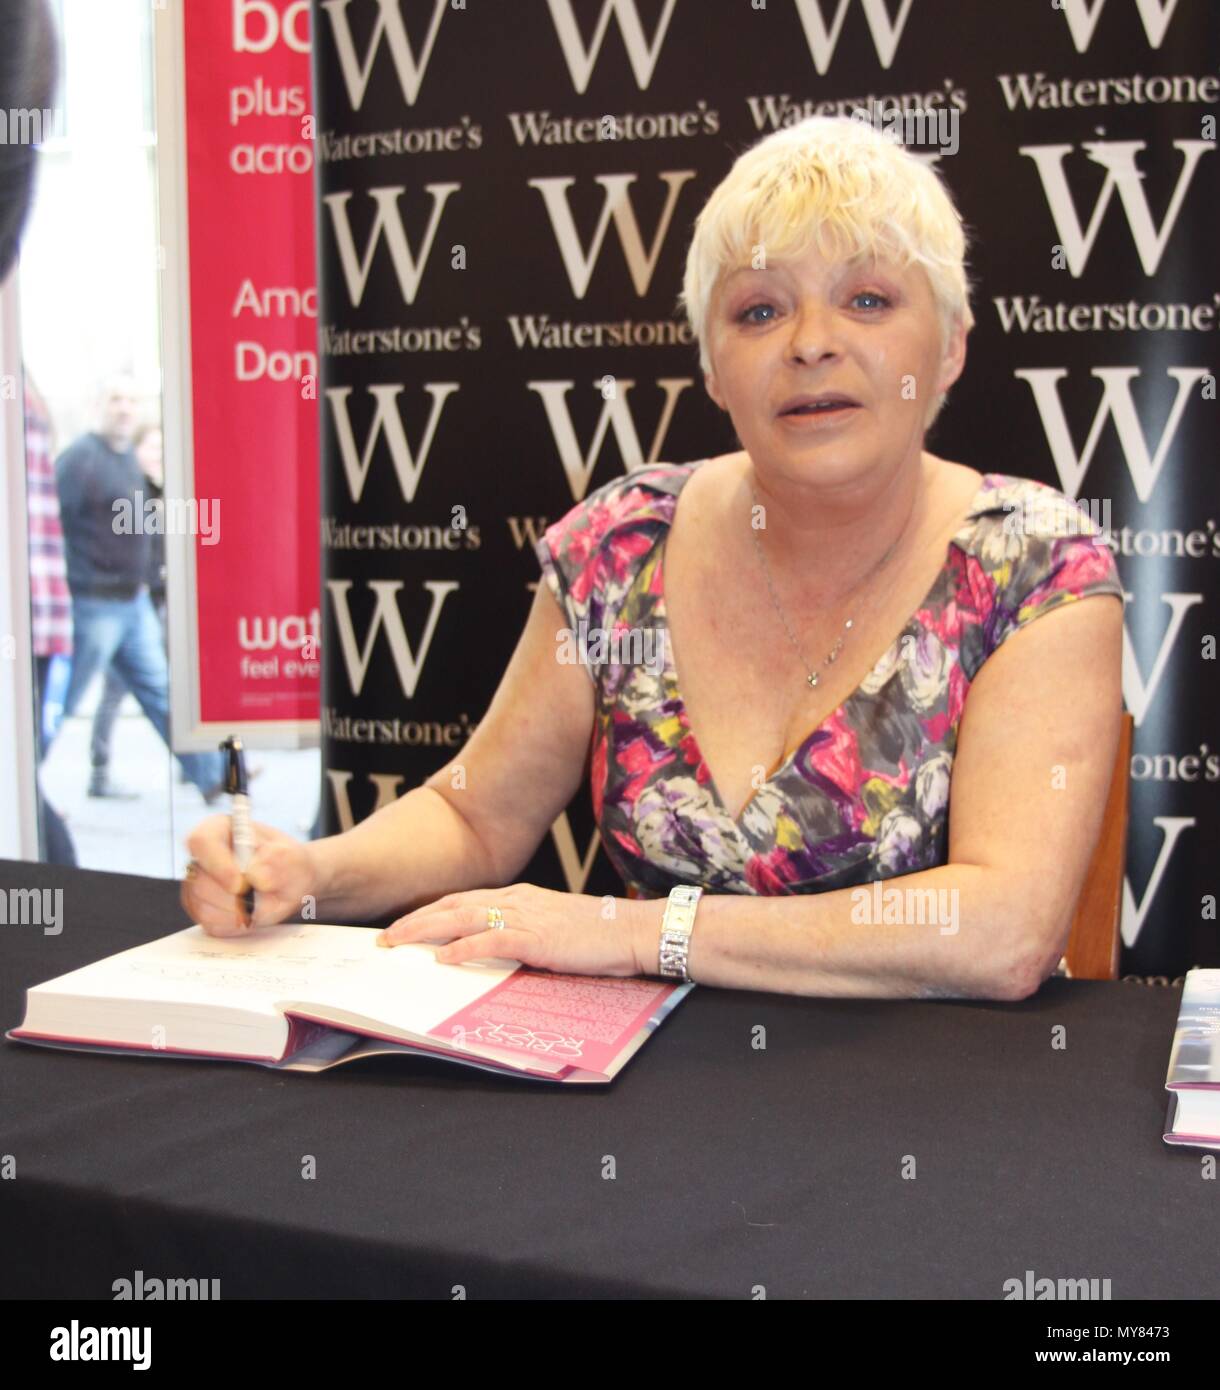 Liverpool,uk, Chrissy Rock signs copies of her autiobiography, credit Ian Fairbrother/Alamy stock photos Stock Photo